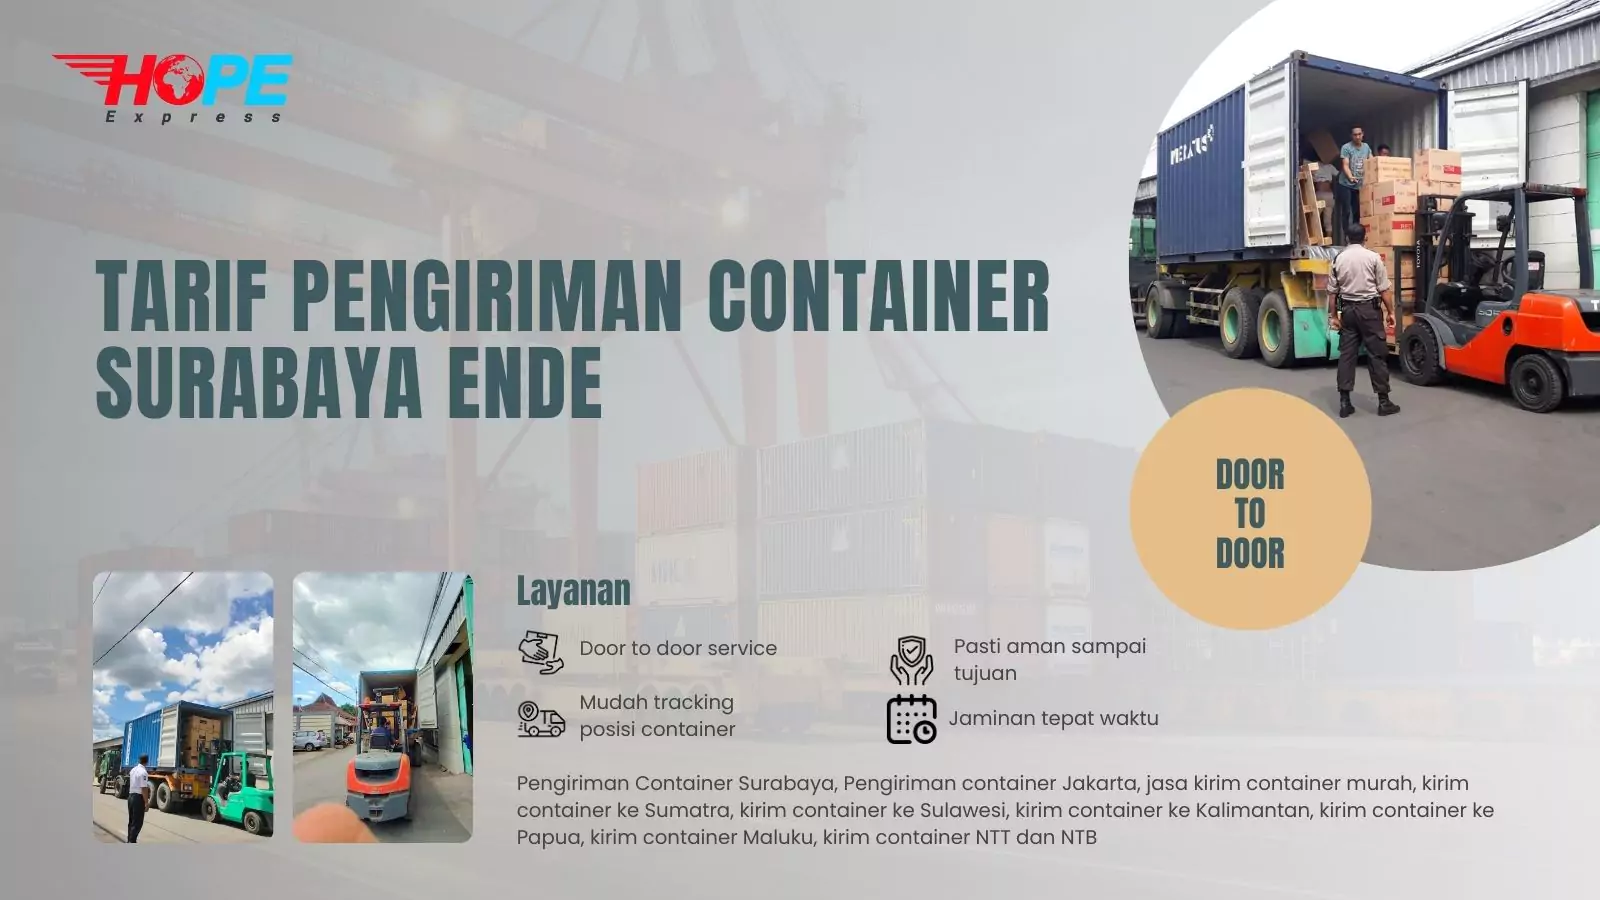 Tarif Pengiriman Container Surabaya Ende